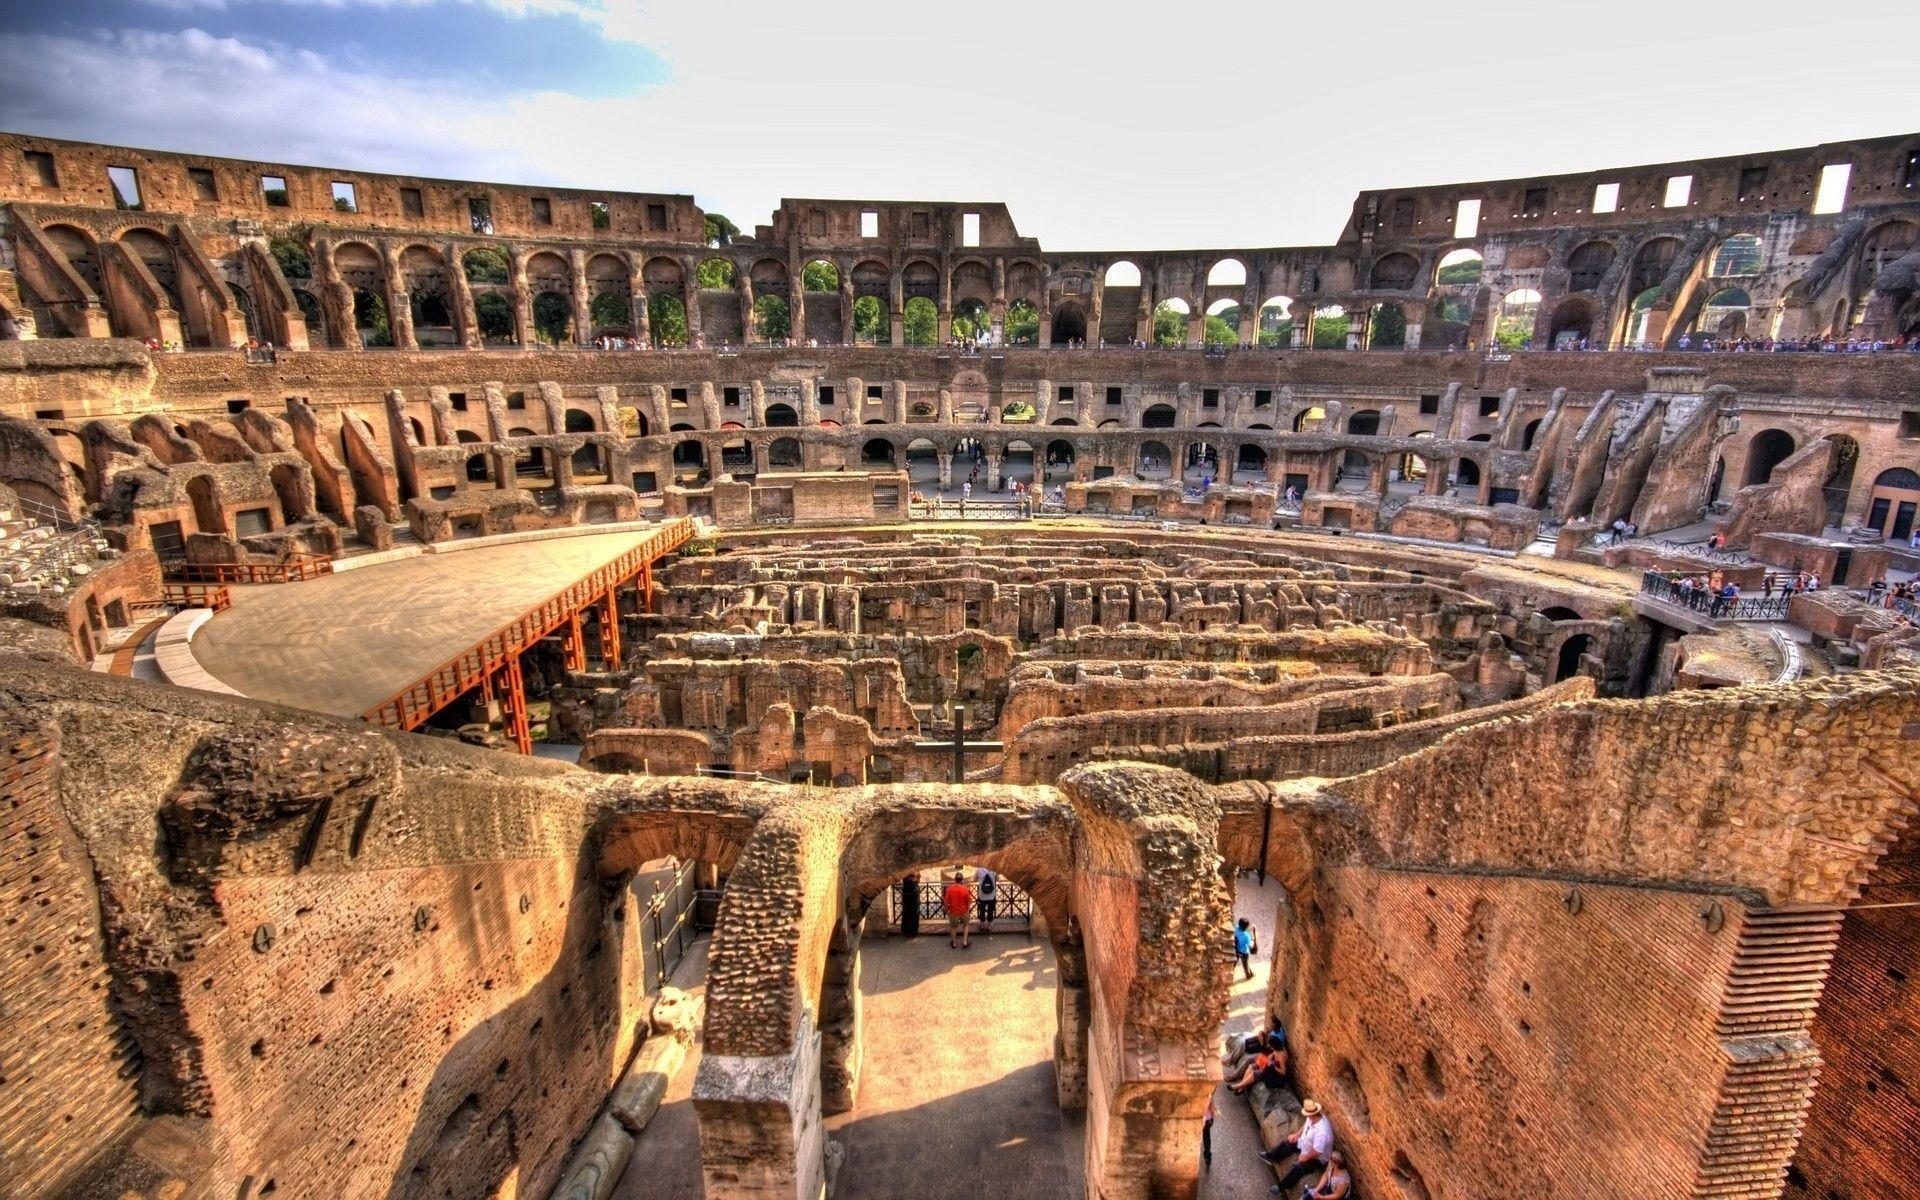 Colosseum Images  Free Download on Freepik